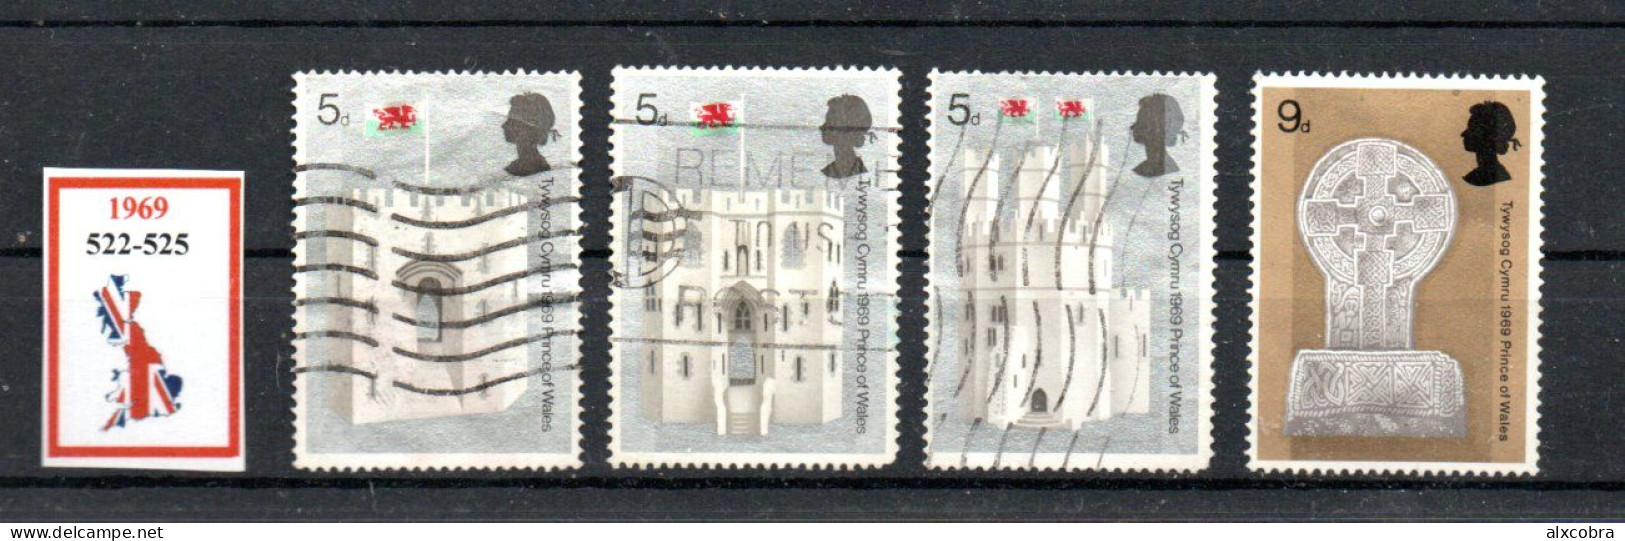 United Kingdom Castles 1969 Michel 522-525 3used 1MNH - Used Stamps